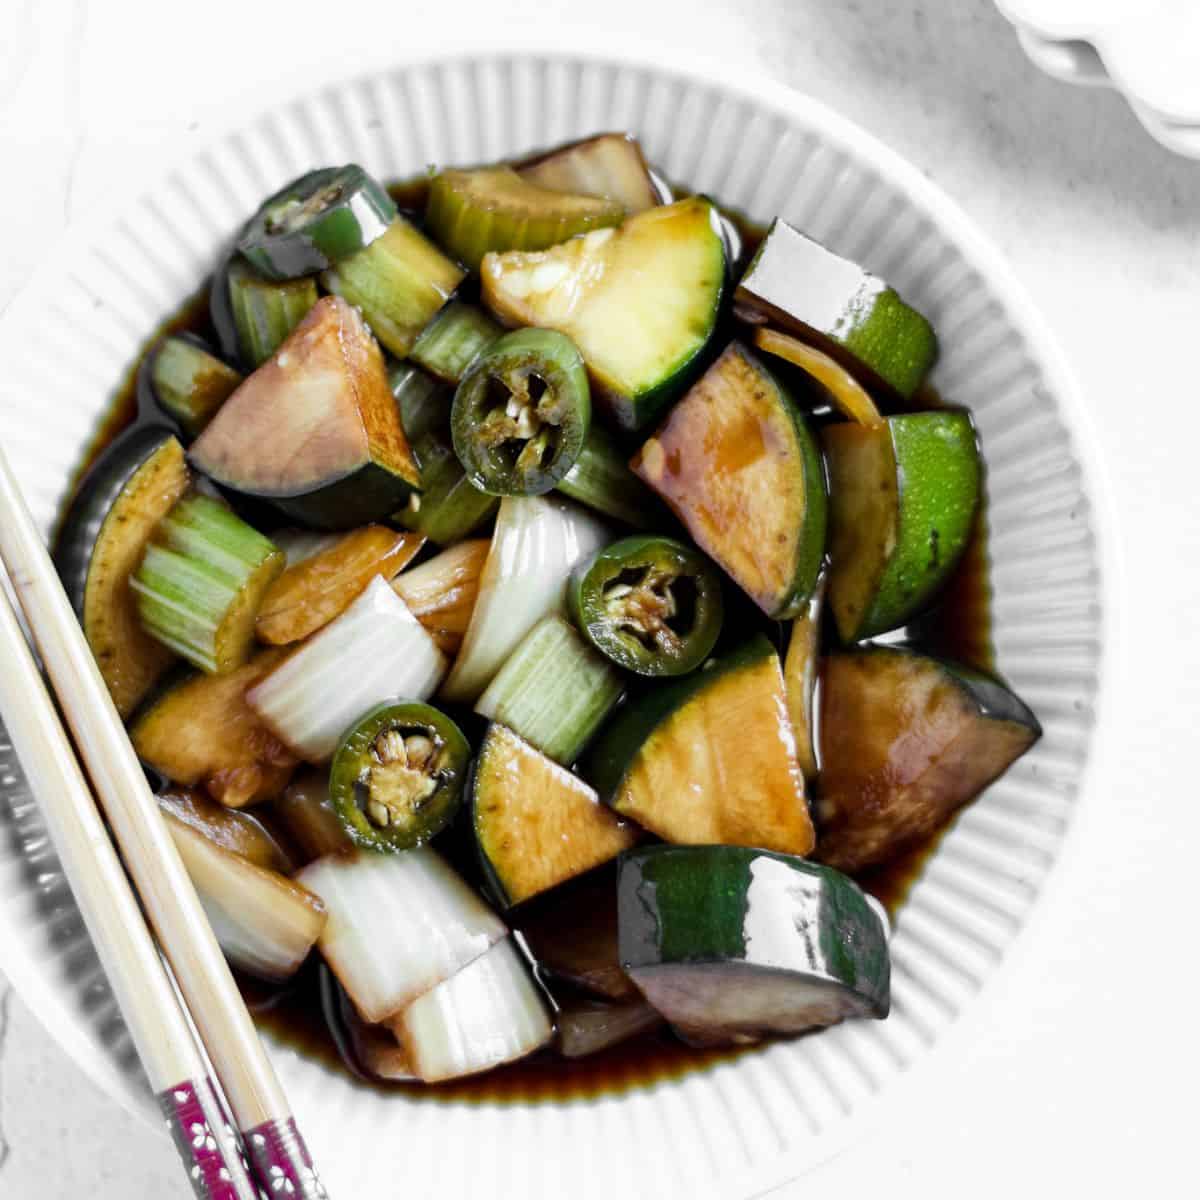 Korean Pickled Vegetables (Jangajji) finish dish in a bowl.